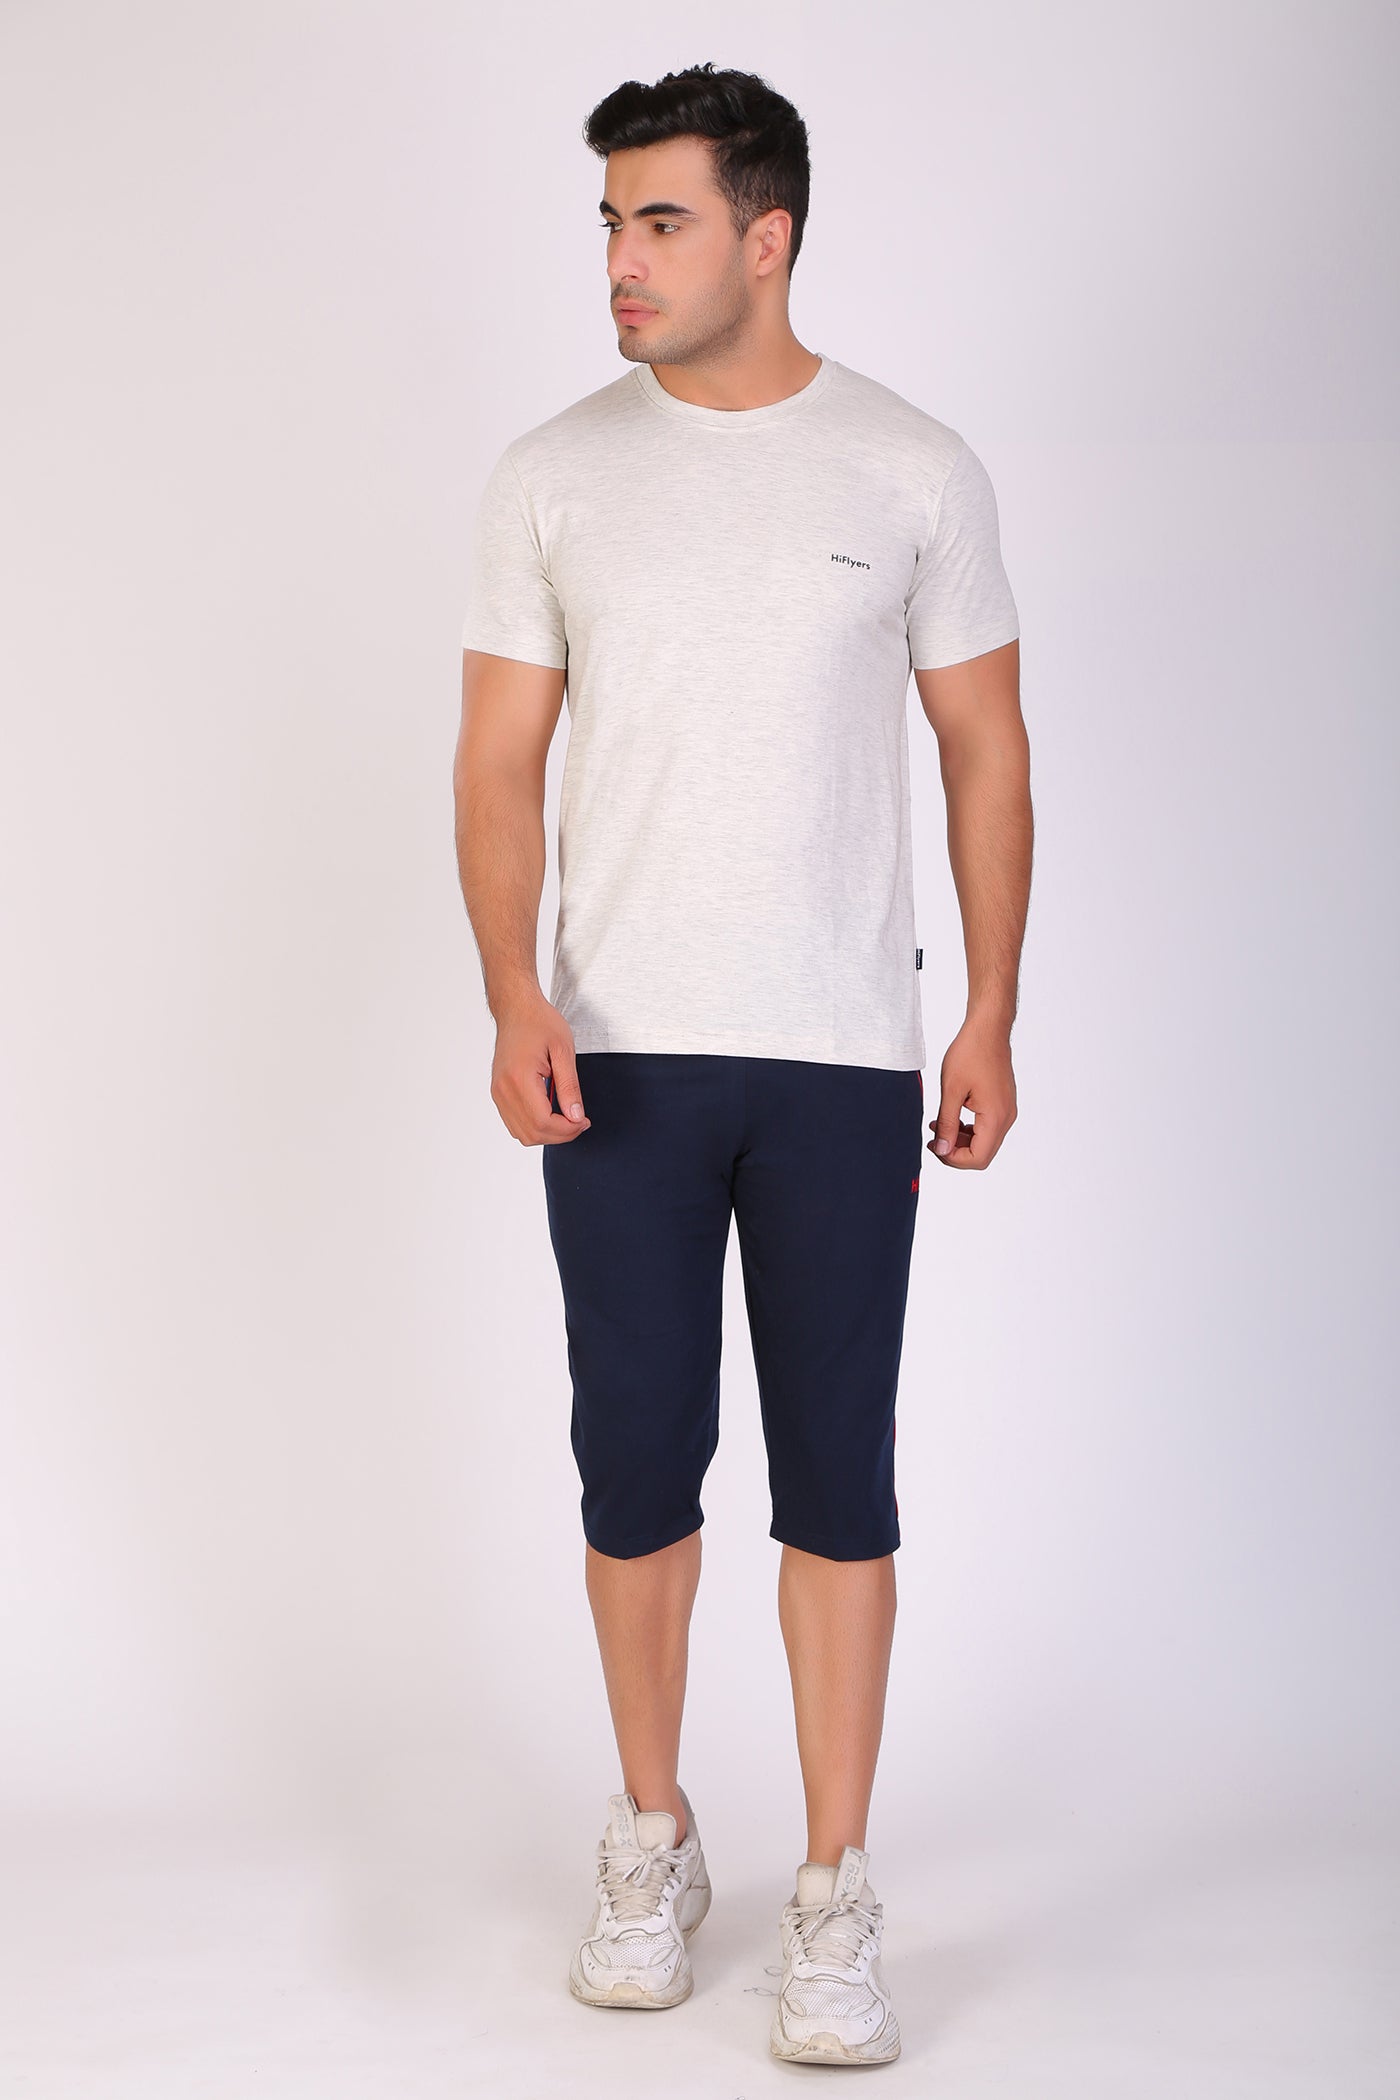 HiFlyers Men Slim Fit Self-Design Premium Rn Tshirts Ecru Melange